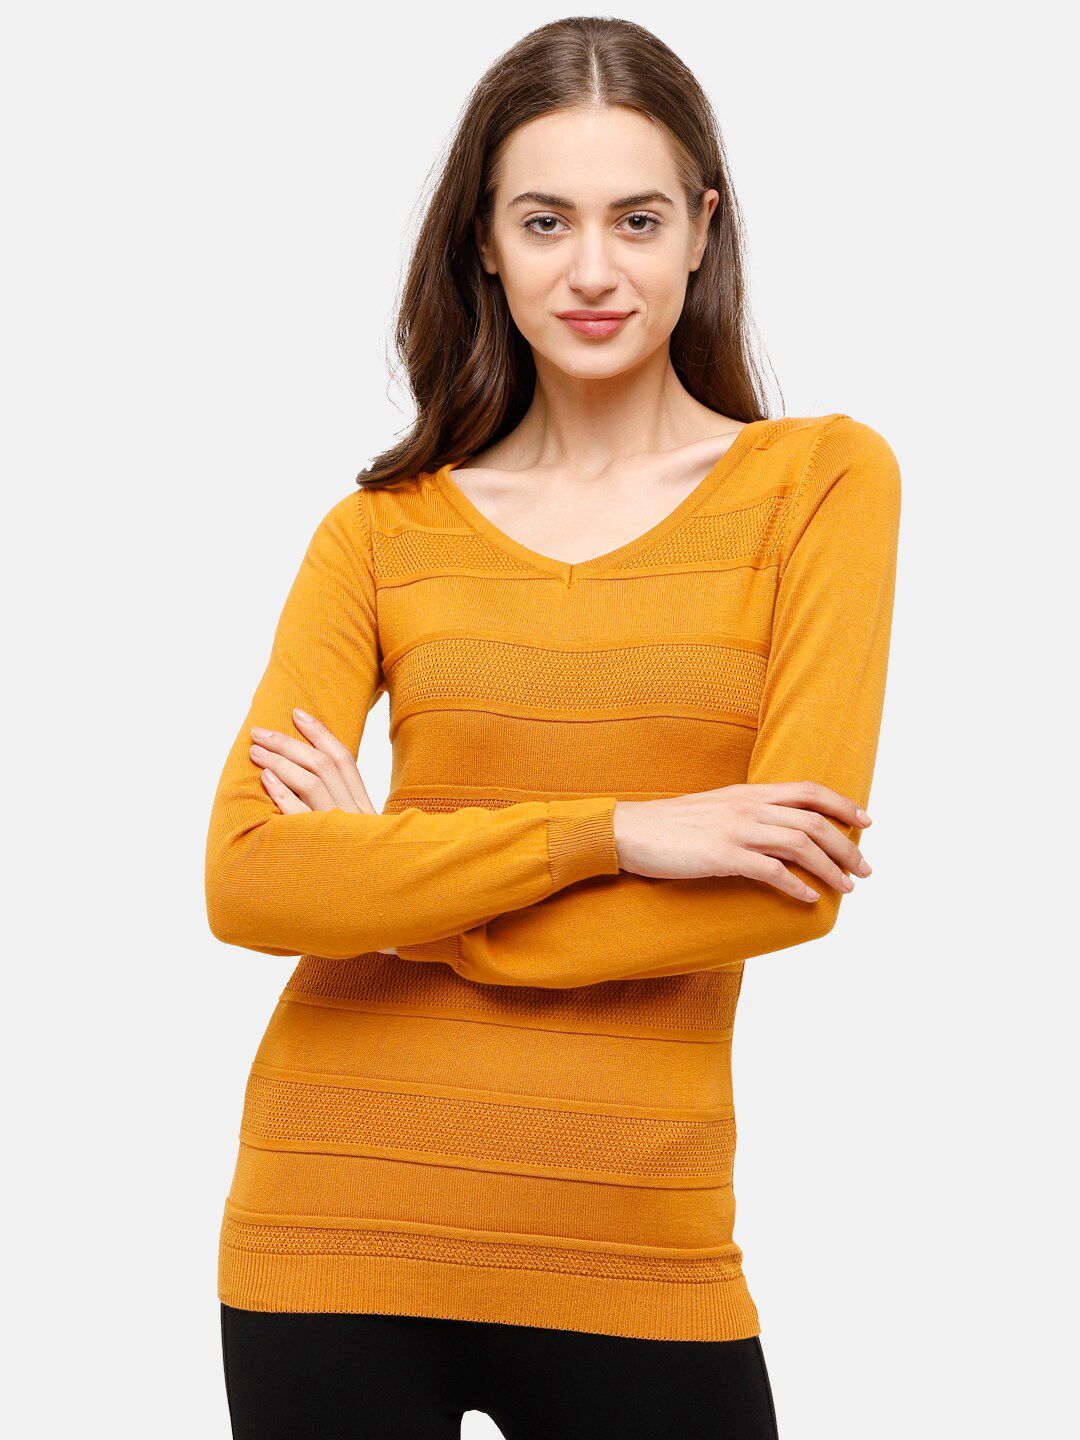 98 Degree North Women Mustard Striped Pullover Price in India